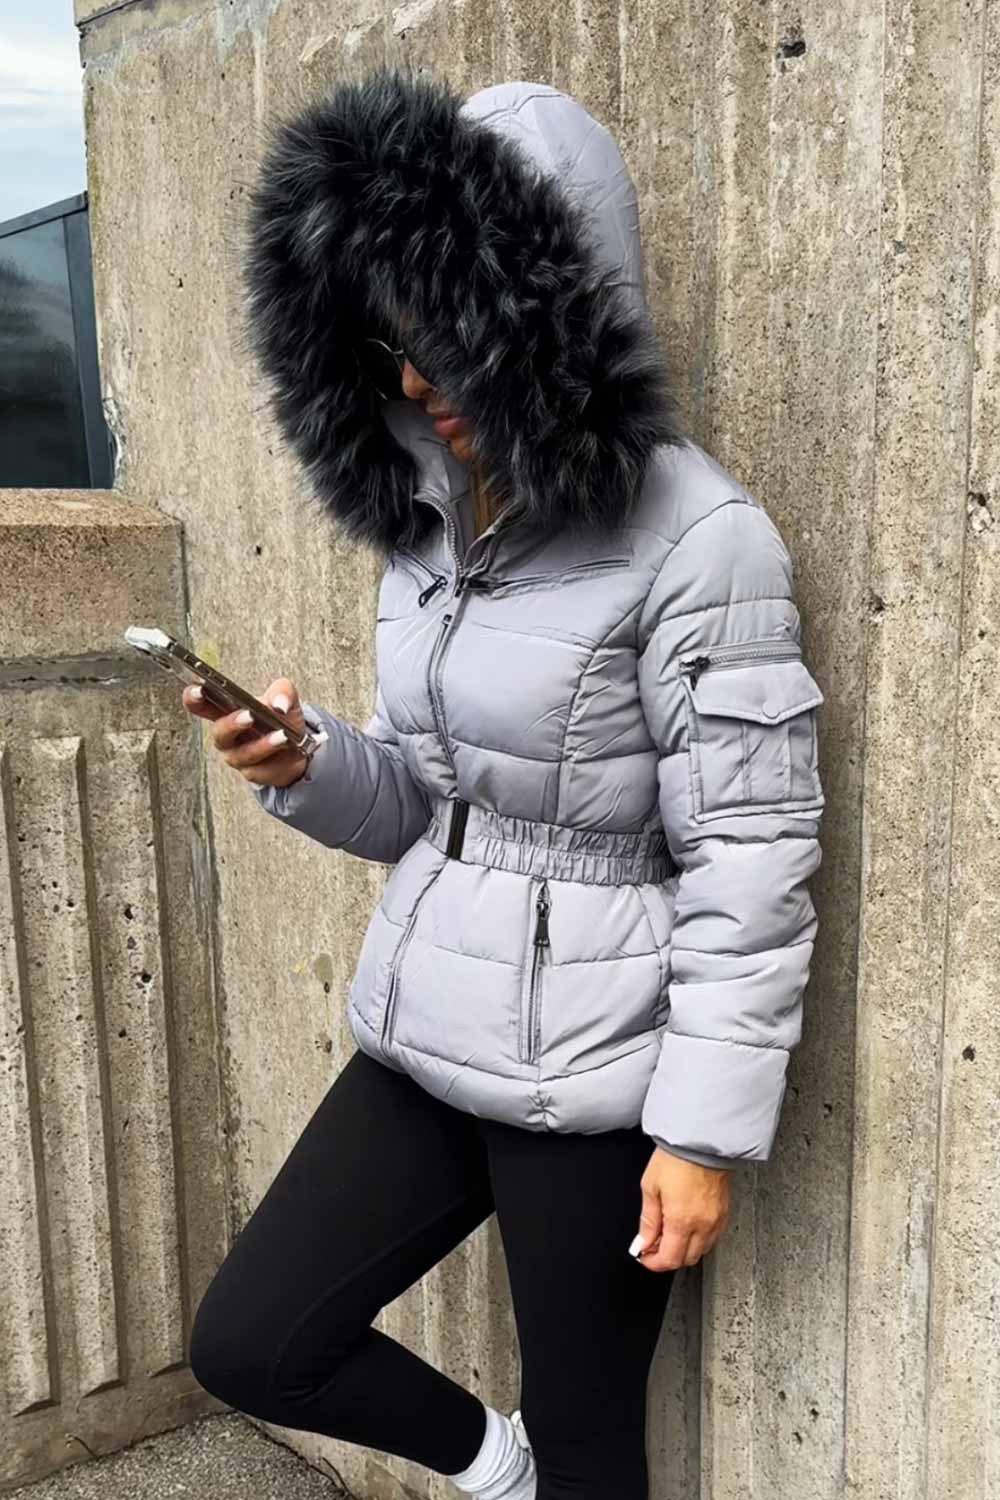 Dark Grey Faux Fur Hood Puffer Jacket